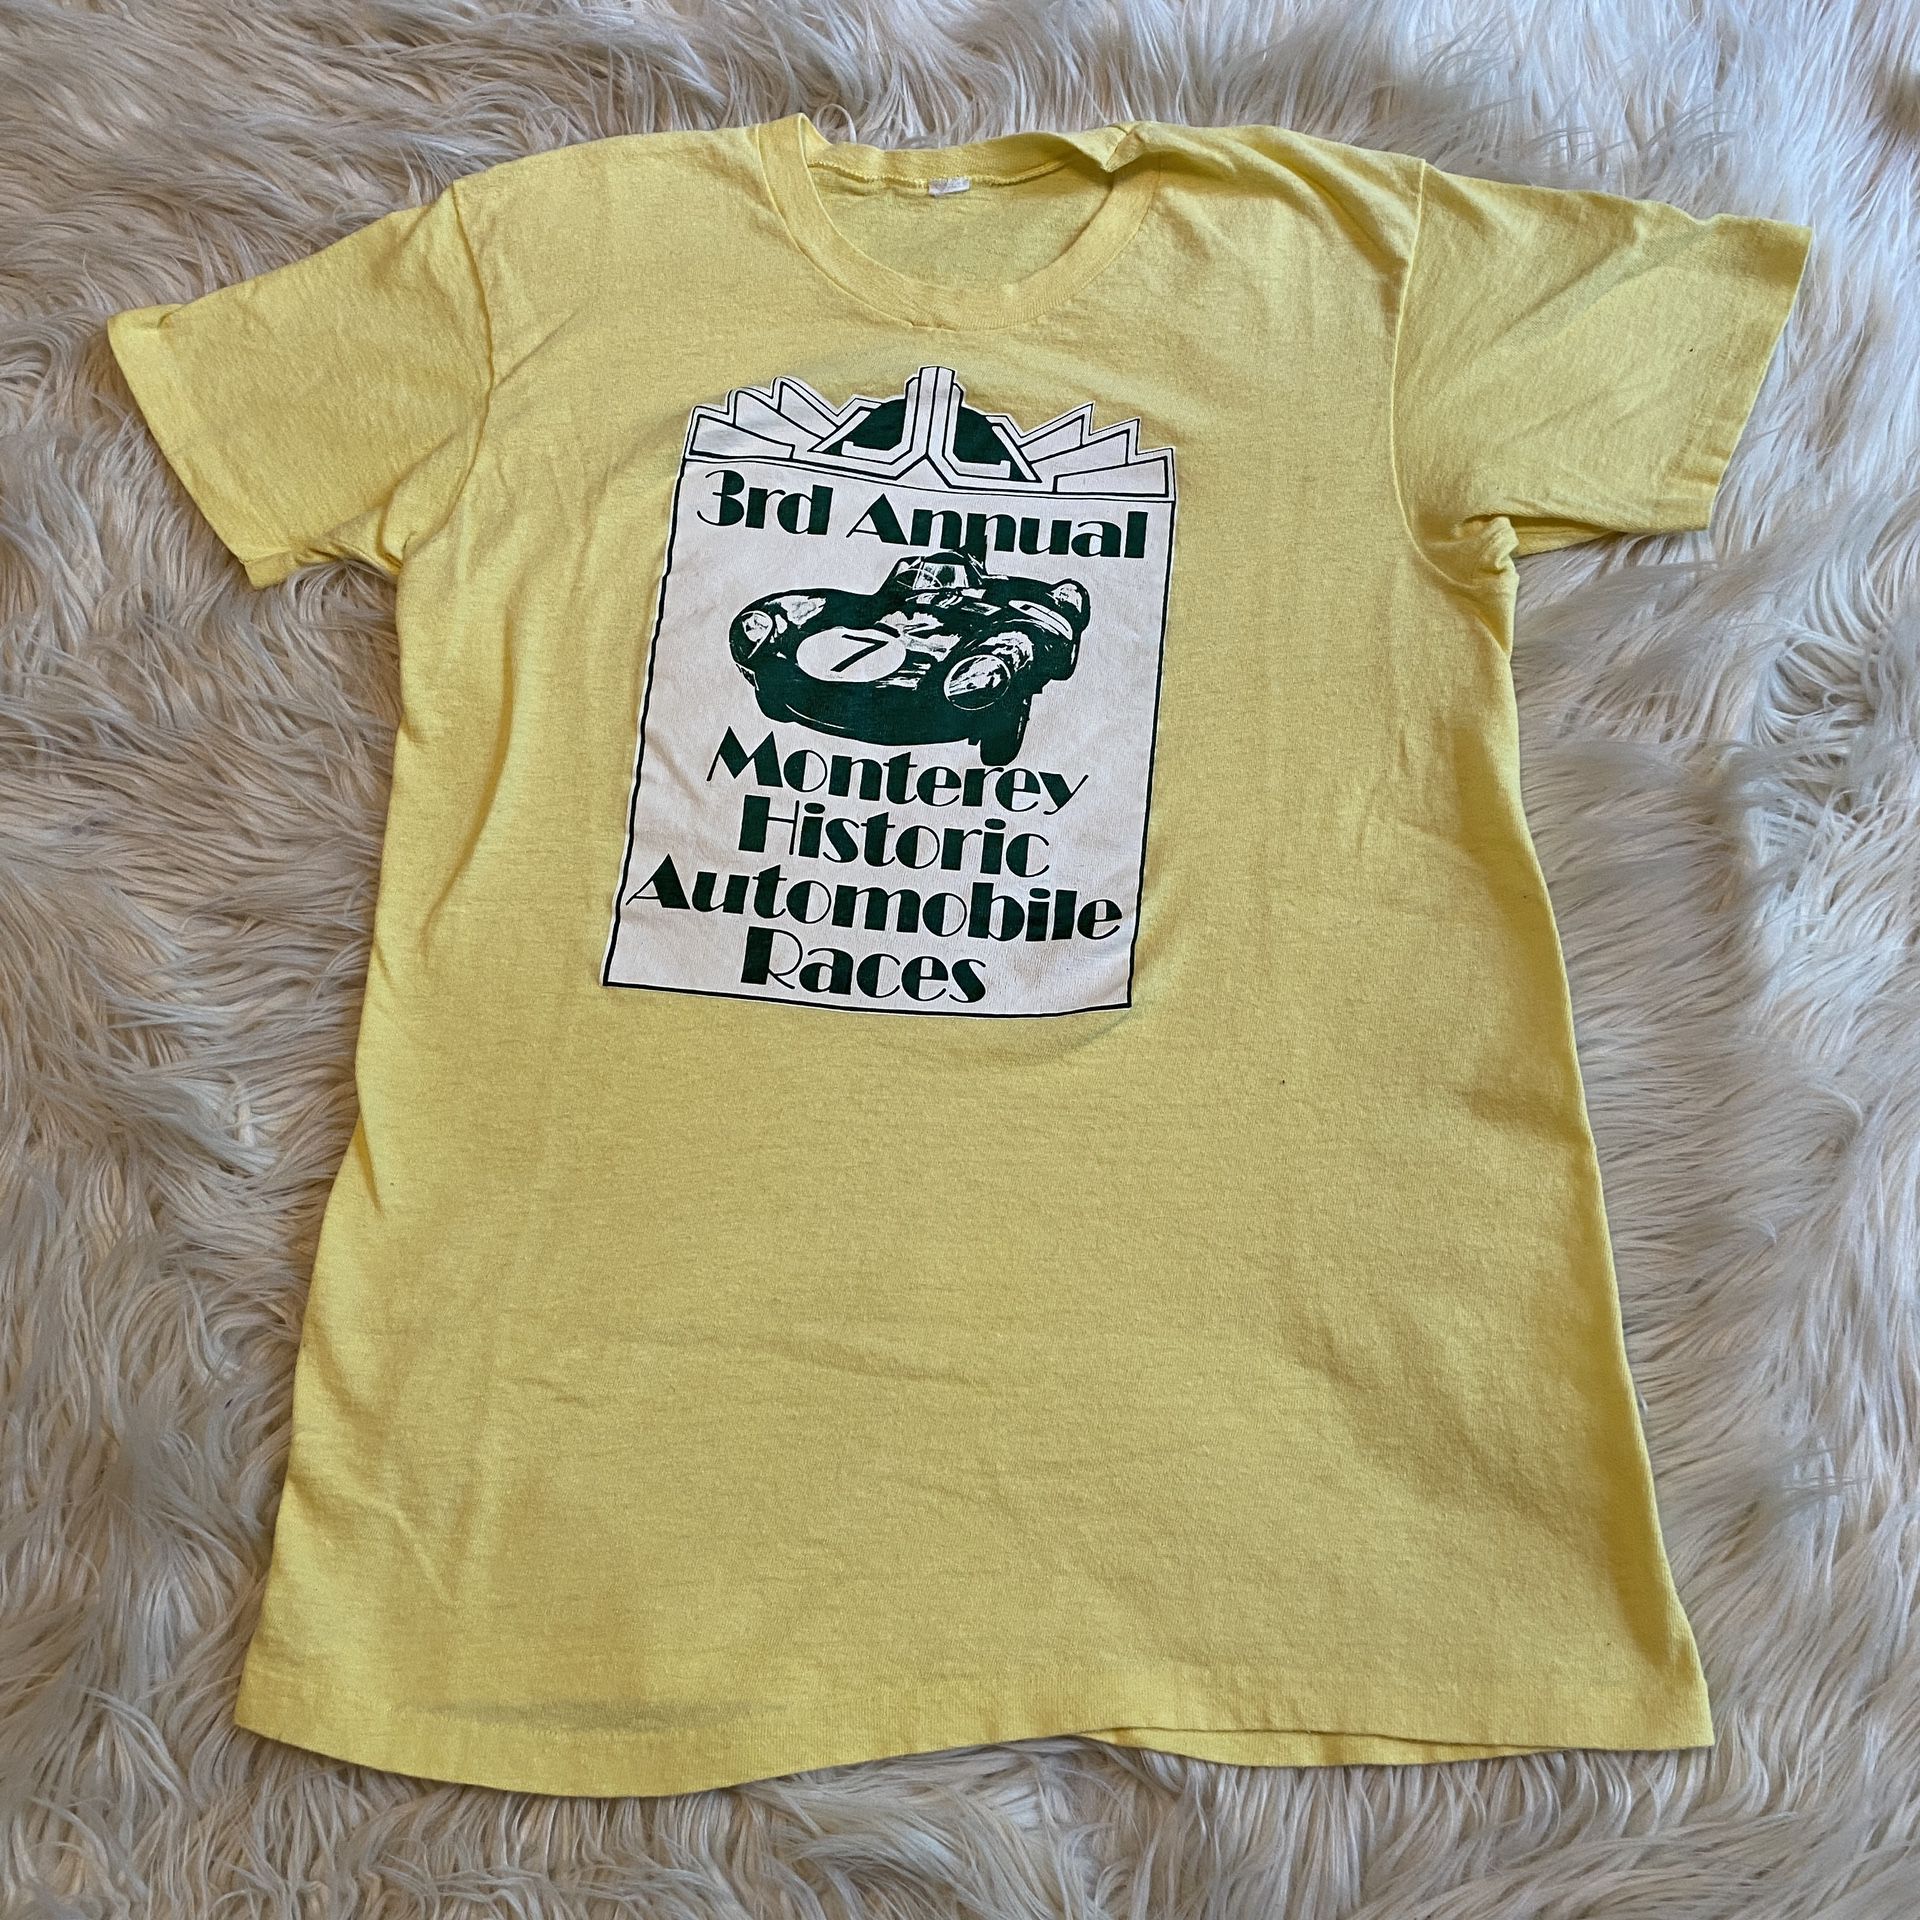 3rd Annual 1976 Monterey Historic Automobile Races Leguna Seca T Shirt S RARE